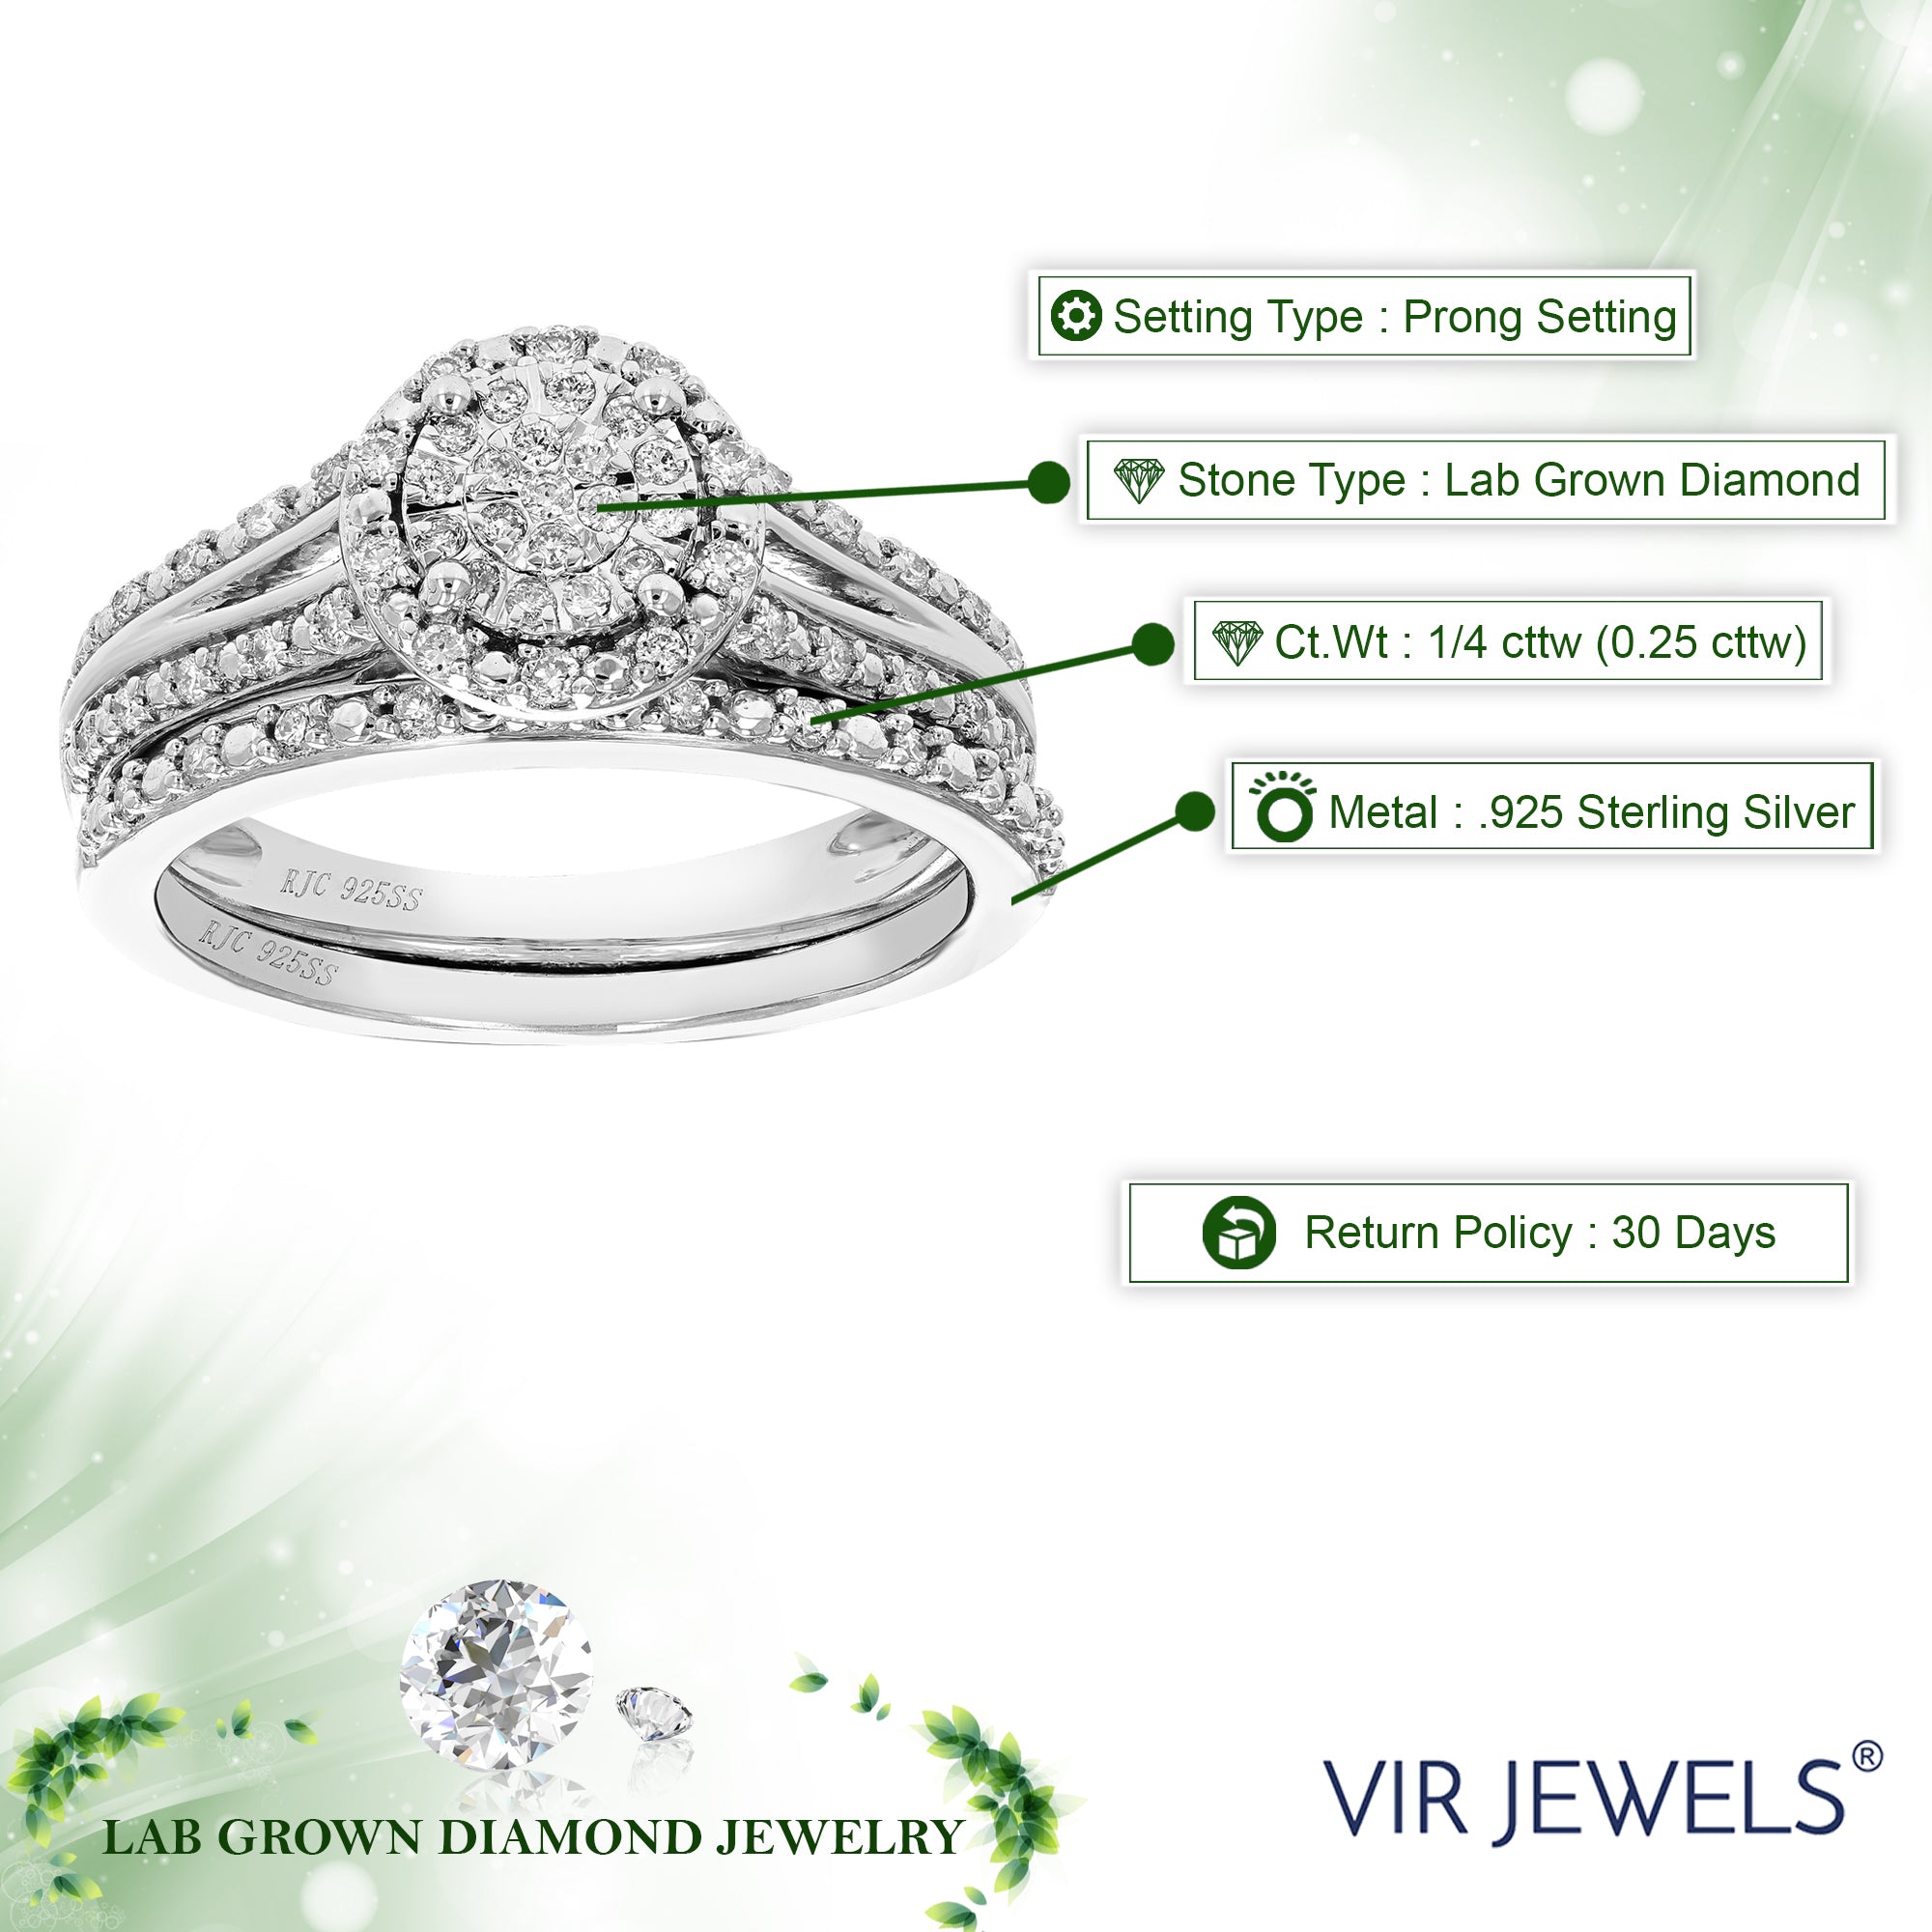 Oval Diamond Bridal Ring Set